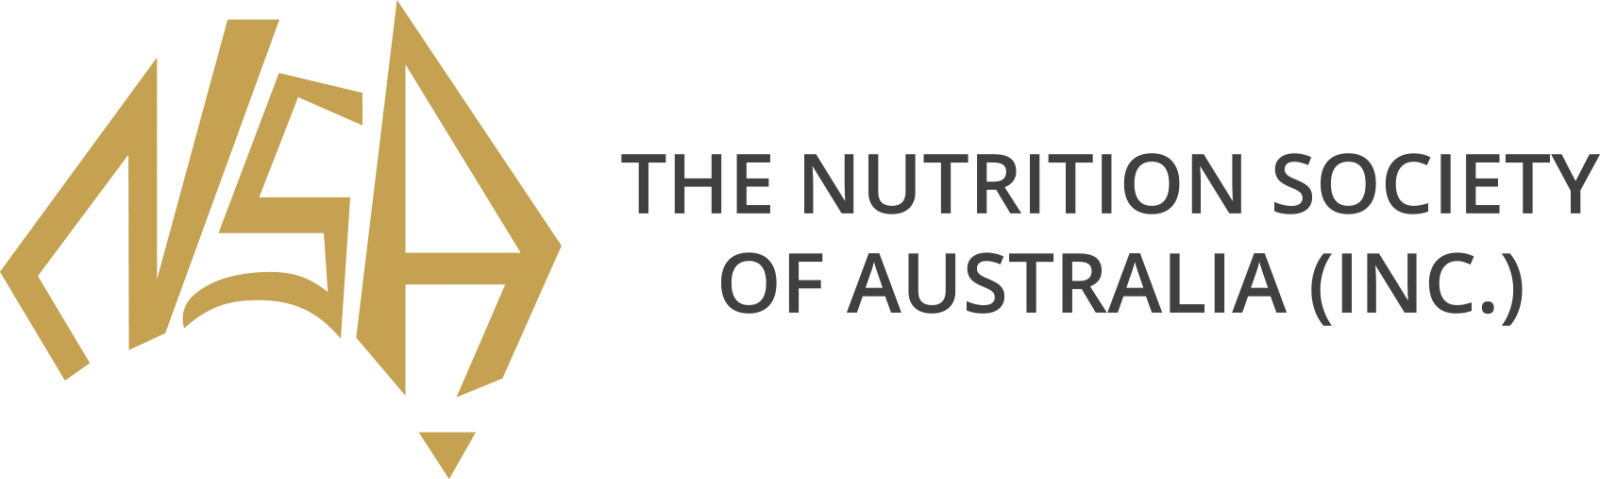 The Nutrition Society of Australia logo